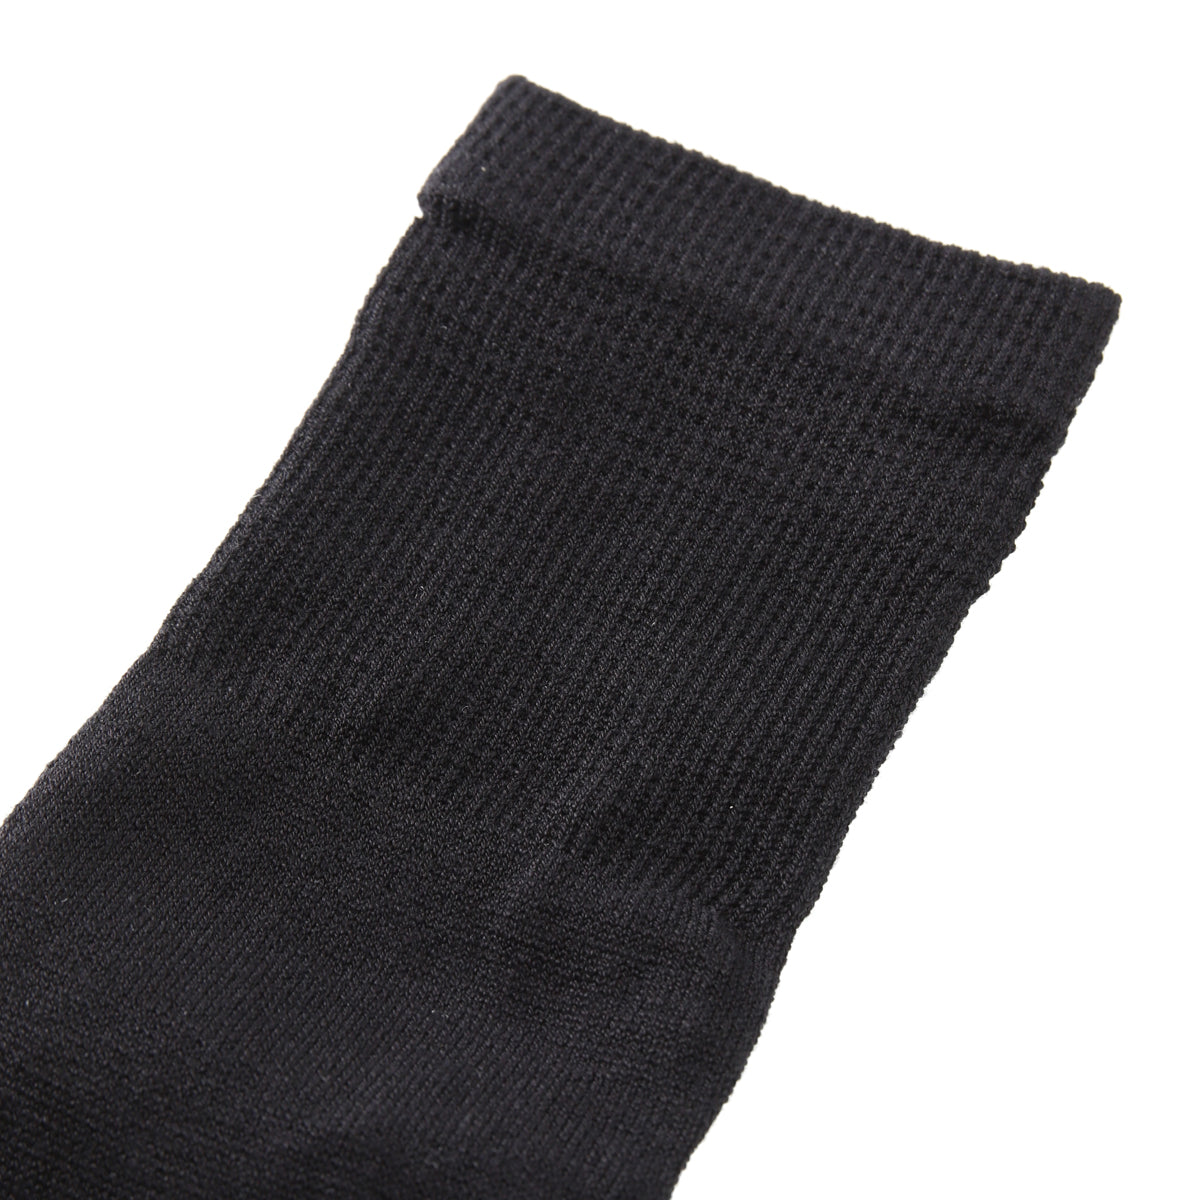 Toe socks (BLACK)